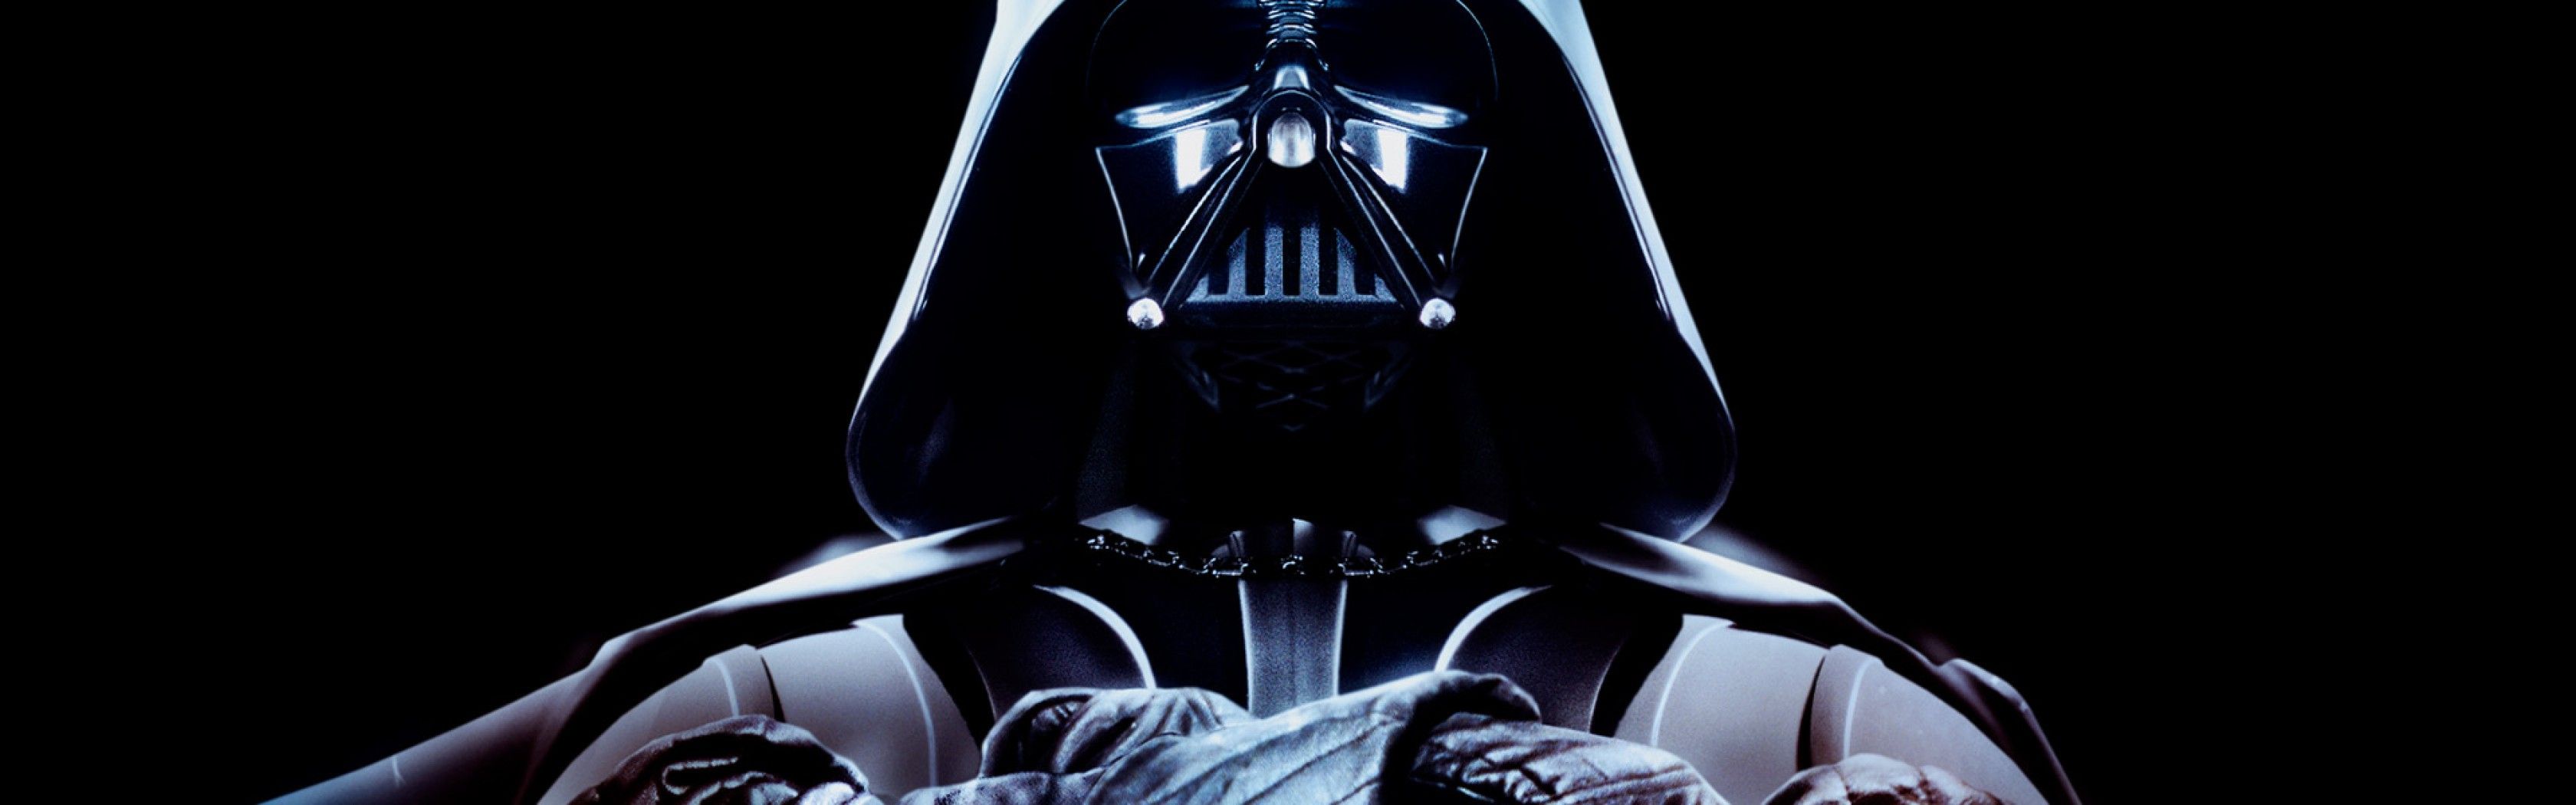 Darth Vader, star wars , movie | HD Wallpapers